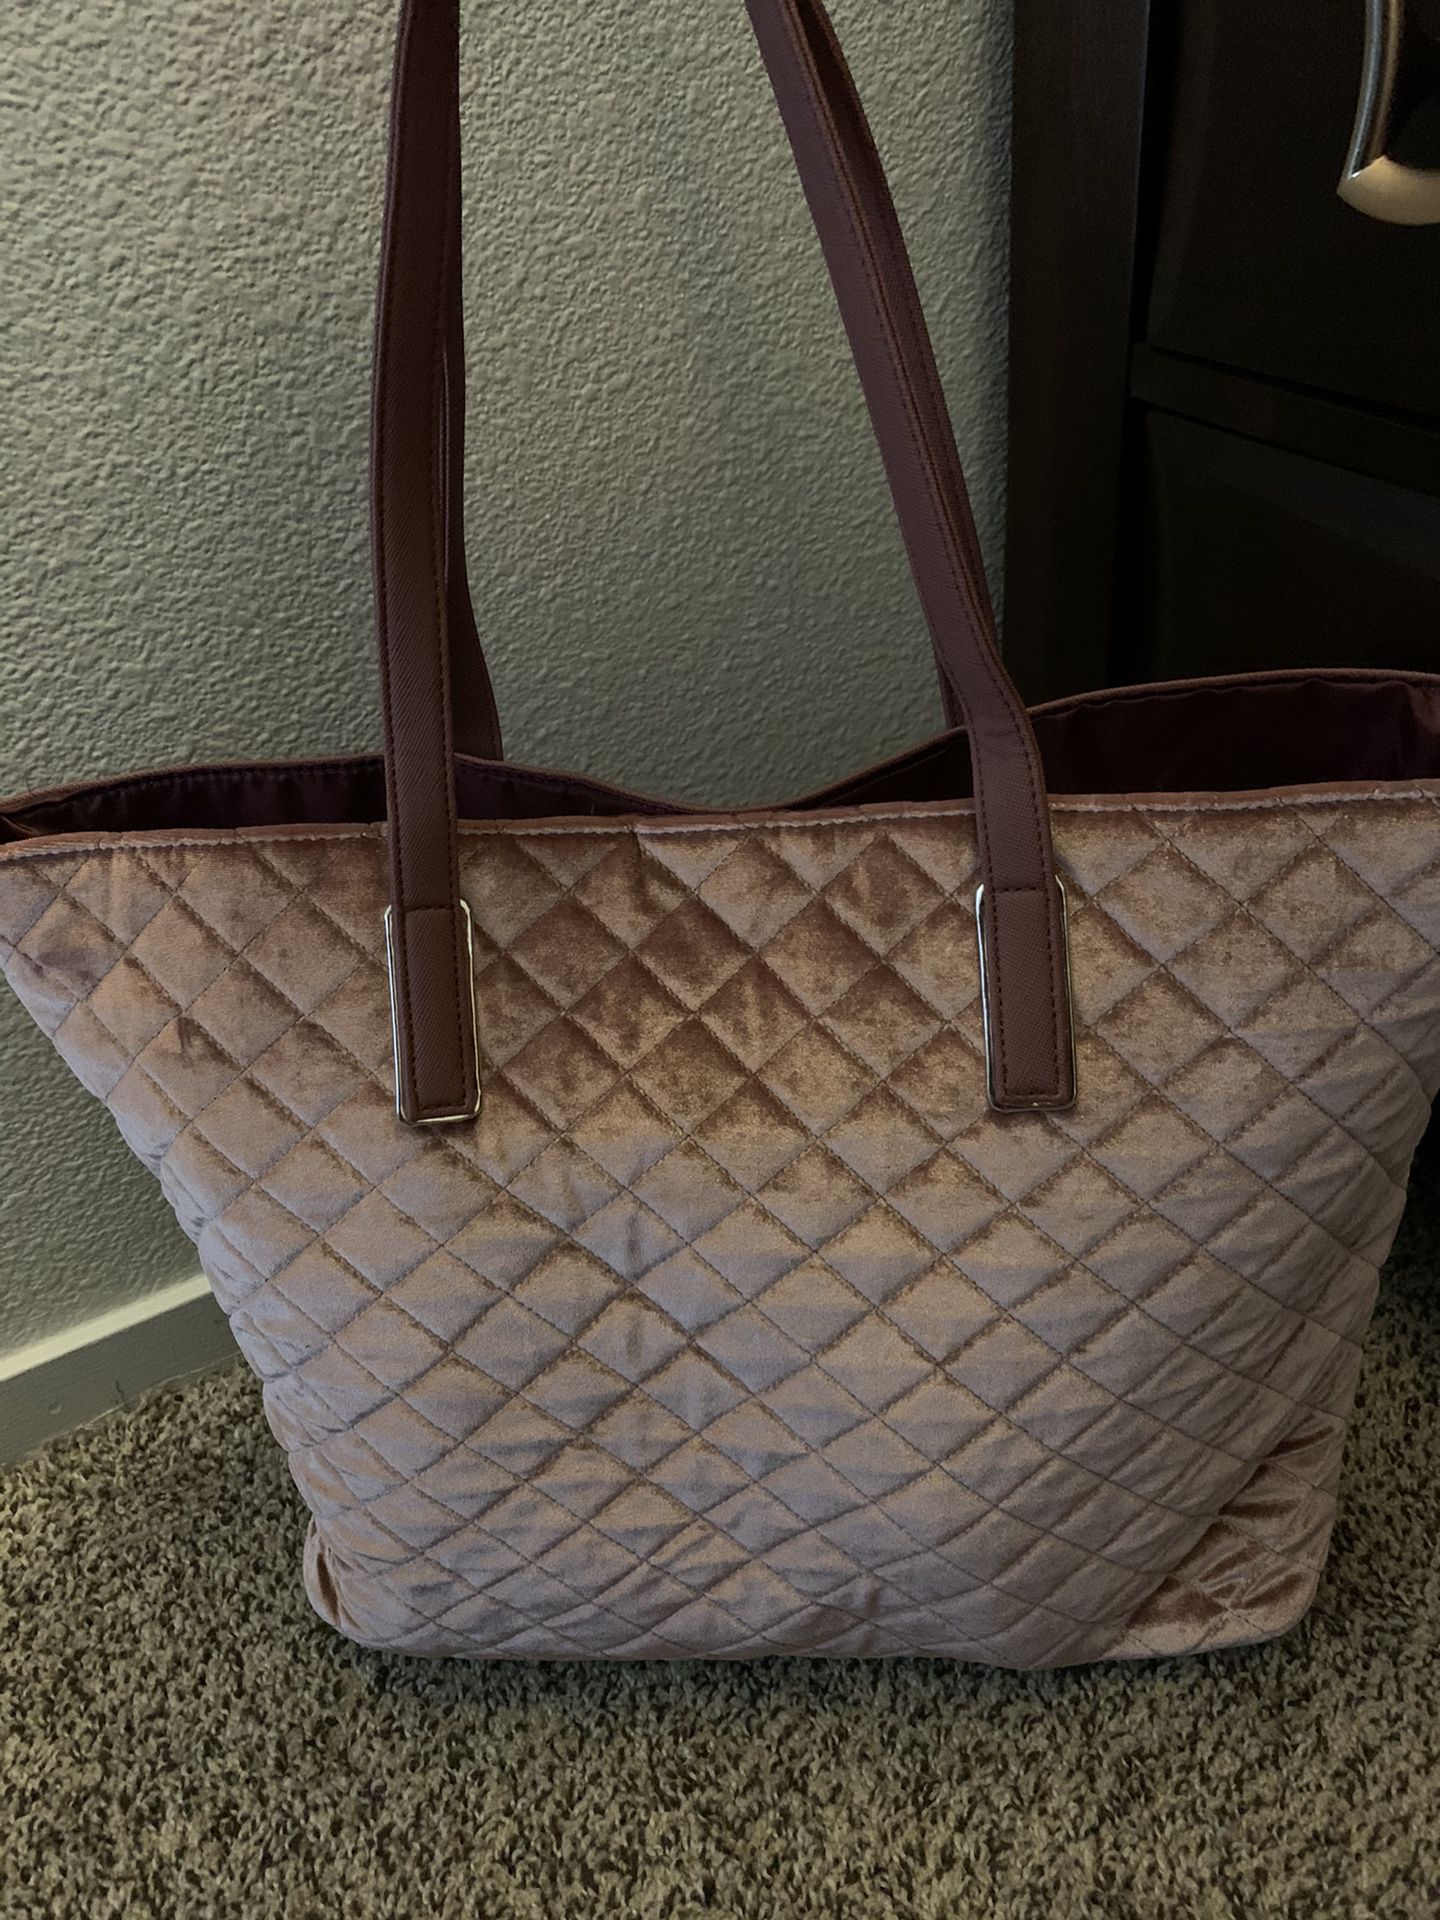 Woman’s tote bag